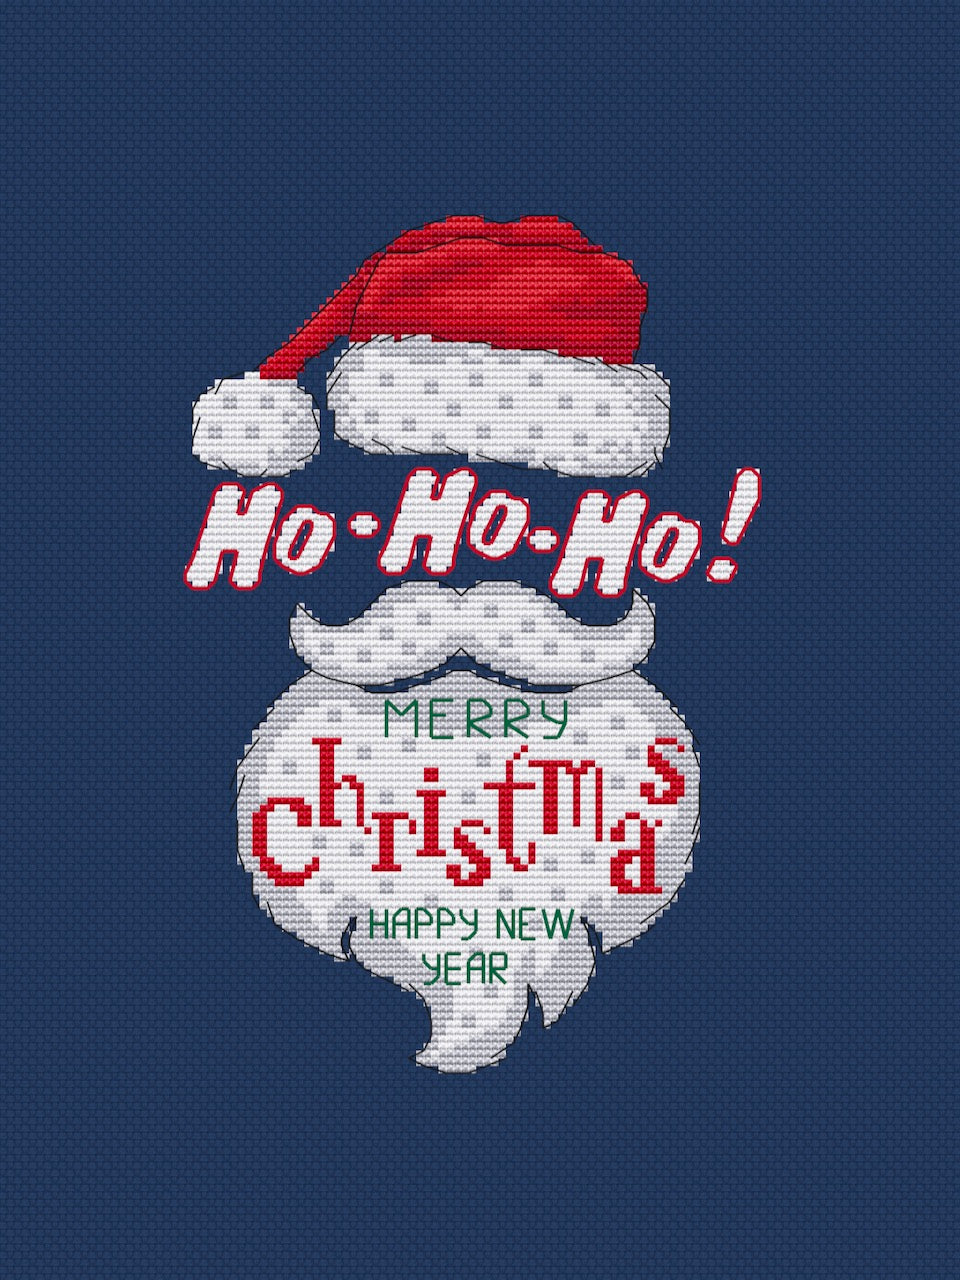 HO-HO-HO cross stitch Christmas pattern on dark fabric